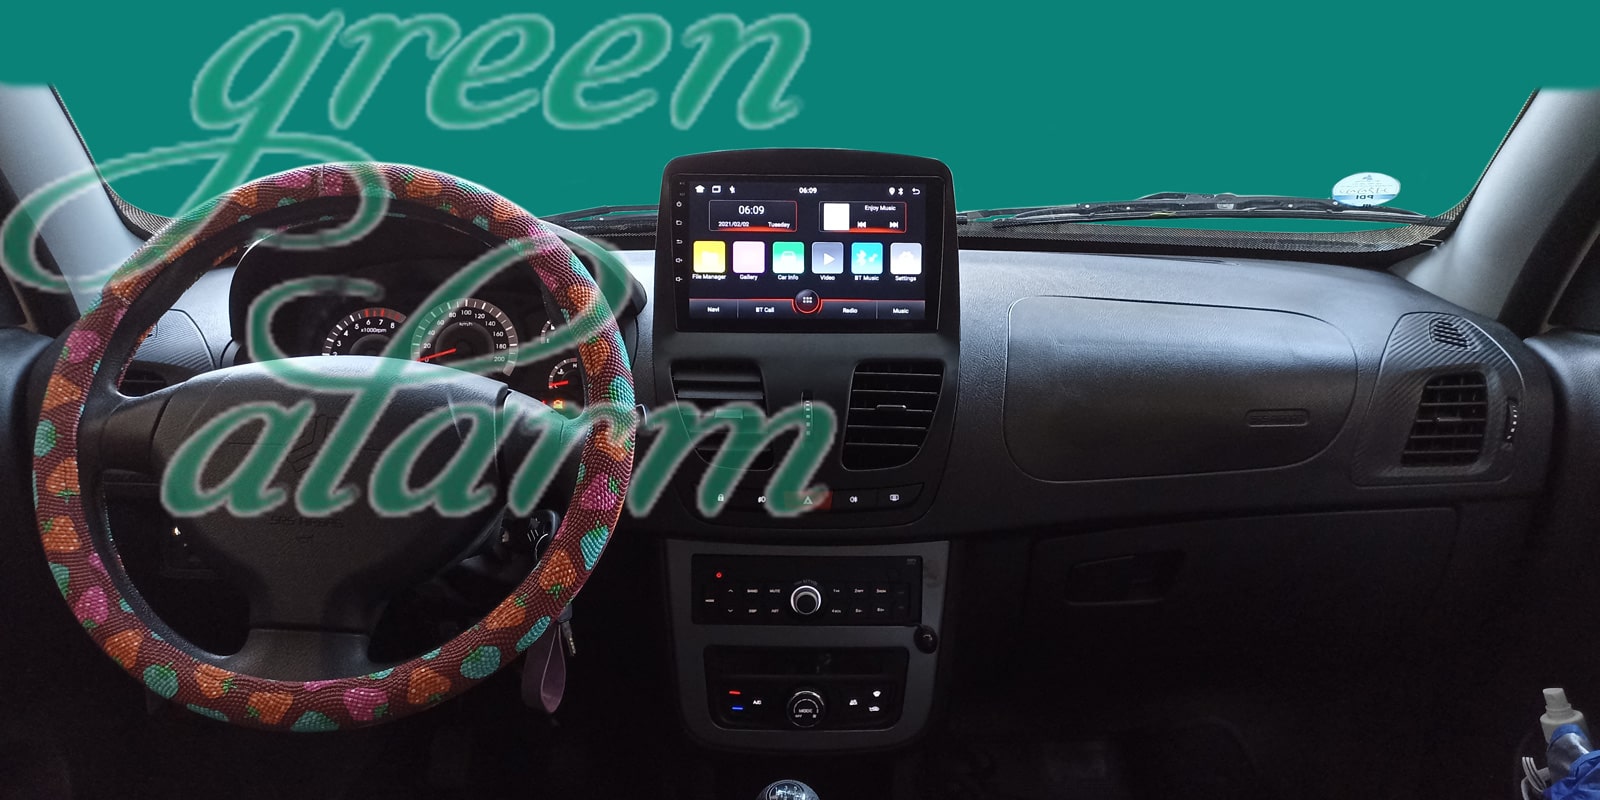 Multimedia - Car quick-greenalarm